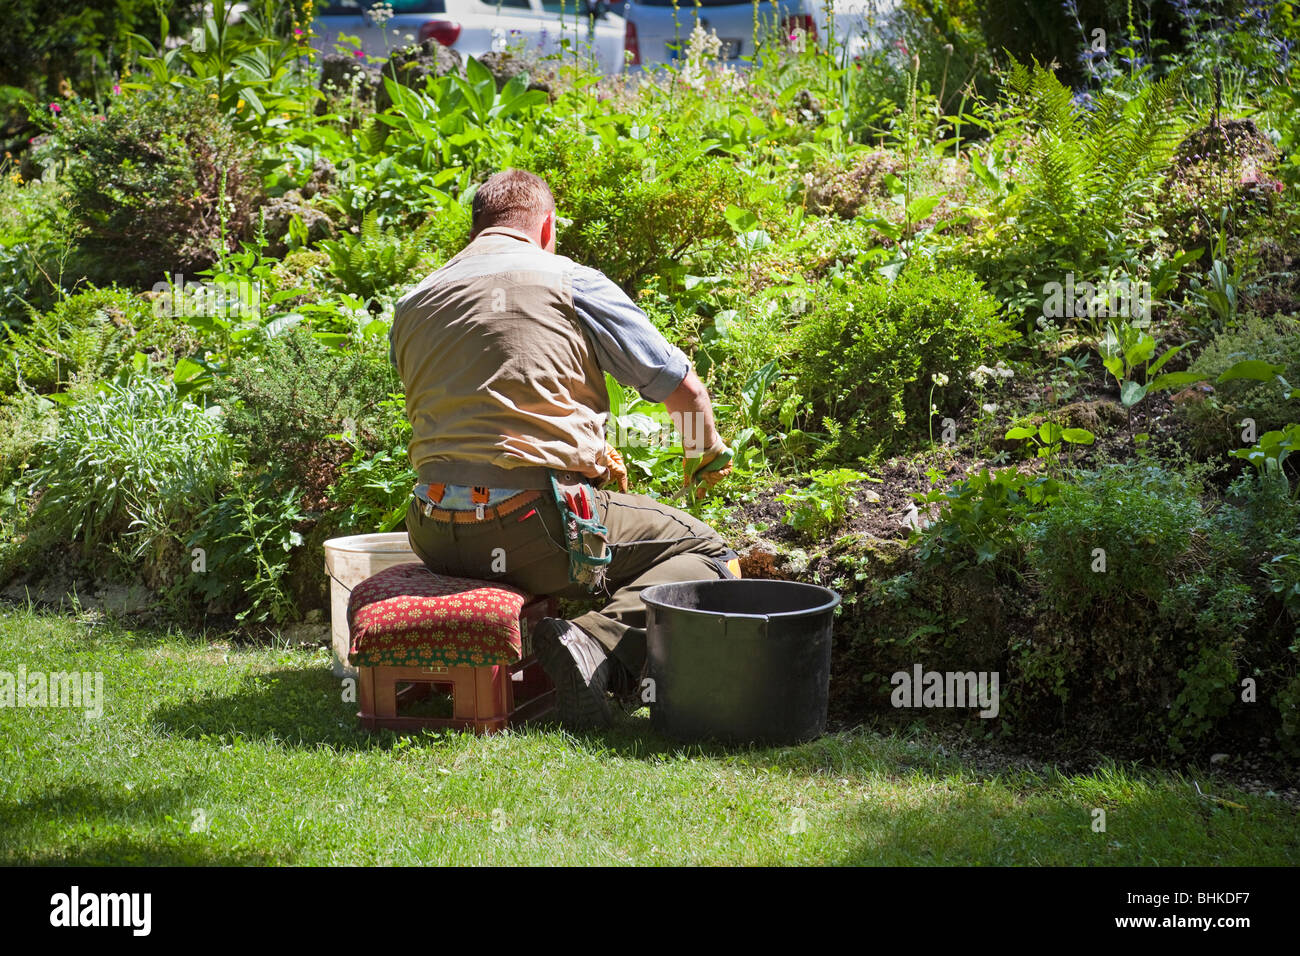 Gardener weeding a flower bed, Germany Stock Photo